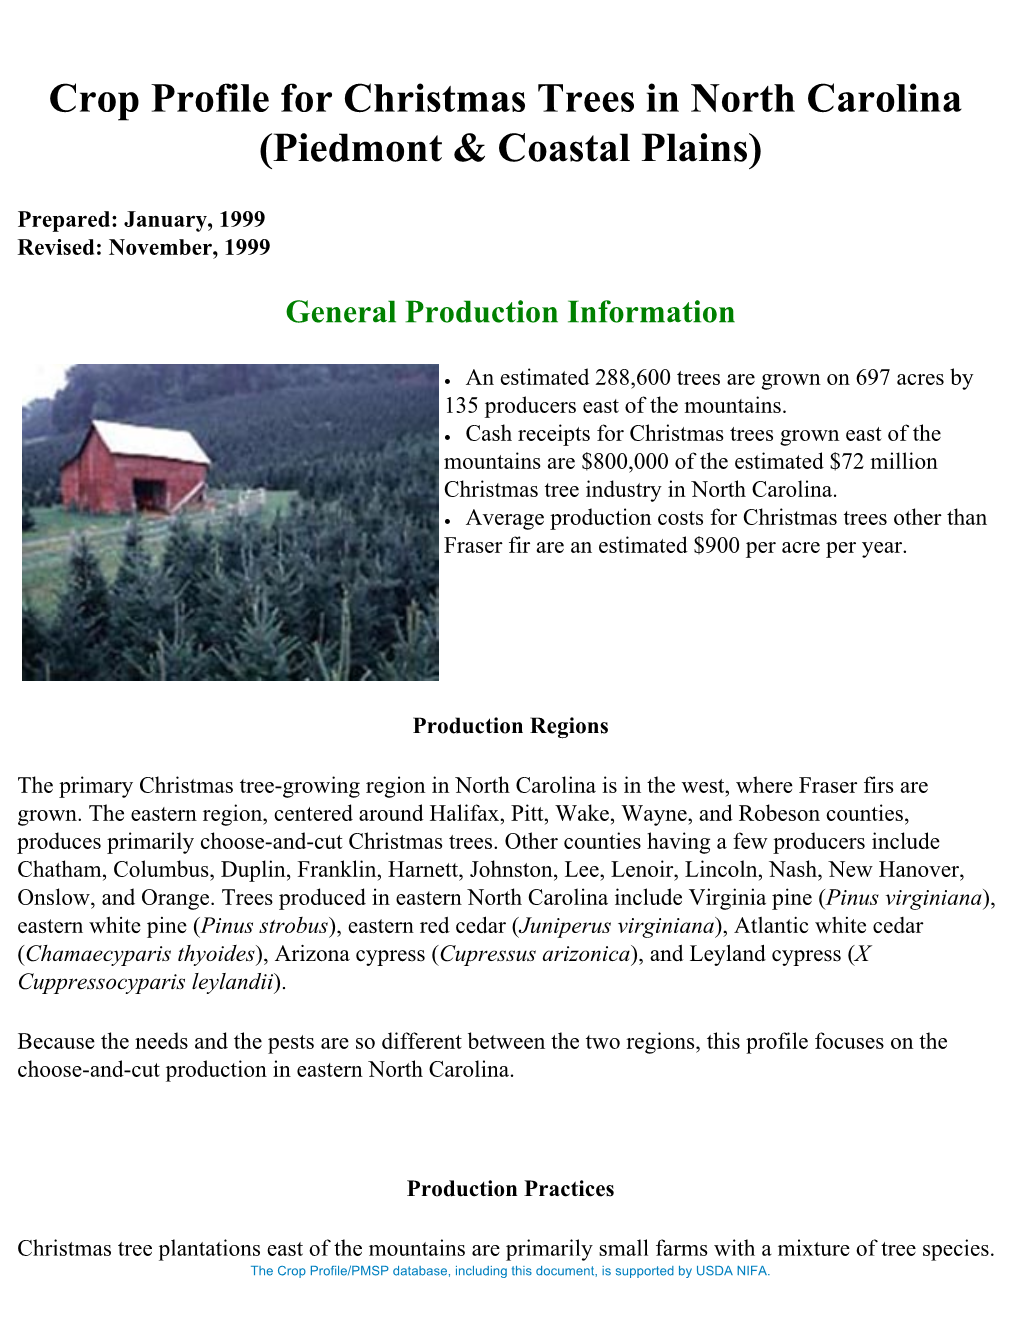 Crop Profile for Christmas Trees in North Carolina (Piedmont & Coastal Plains)